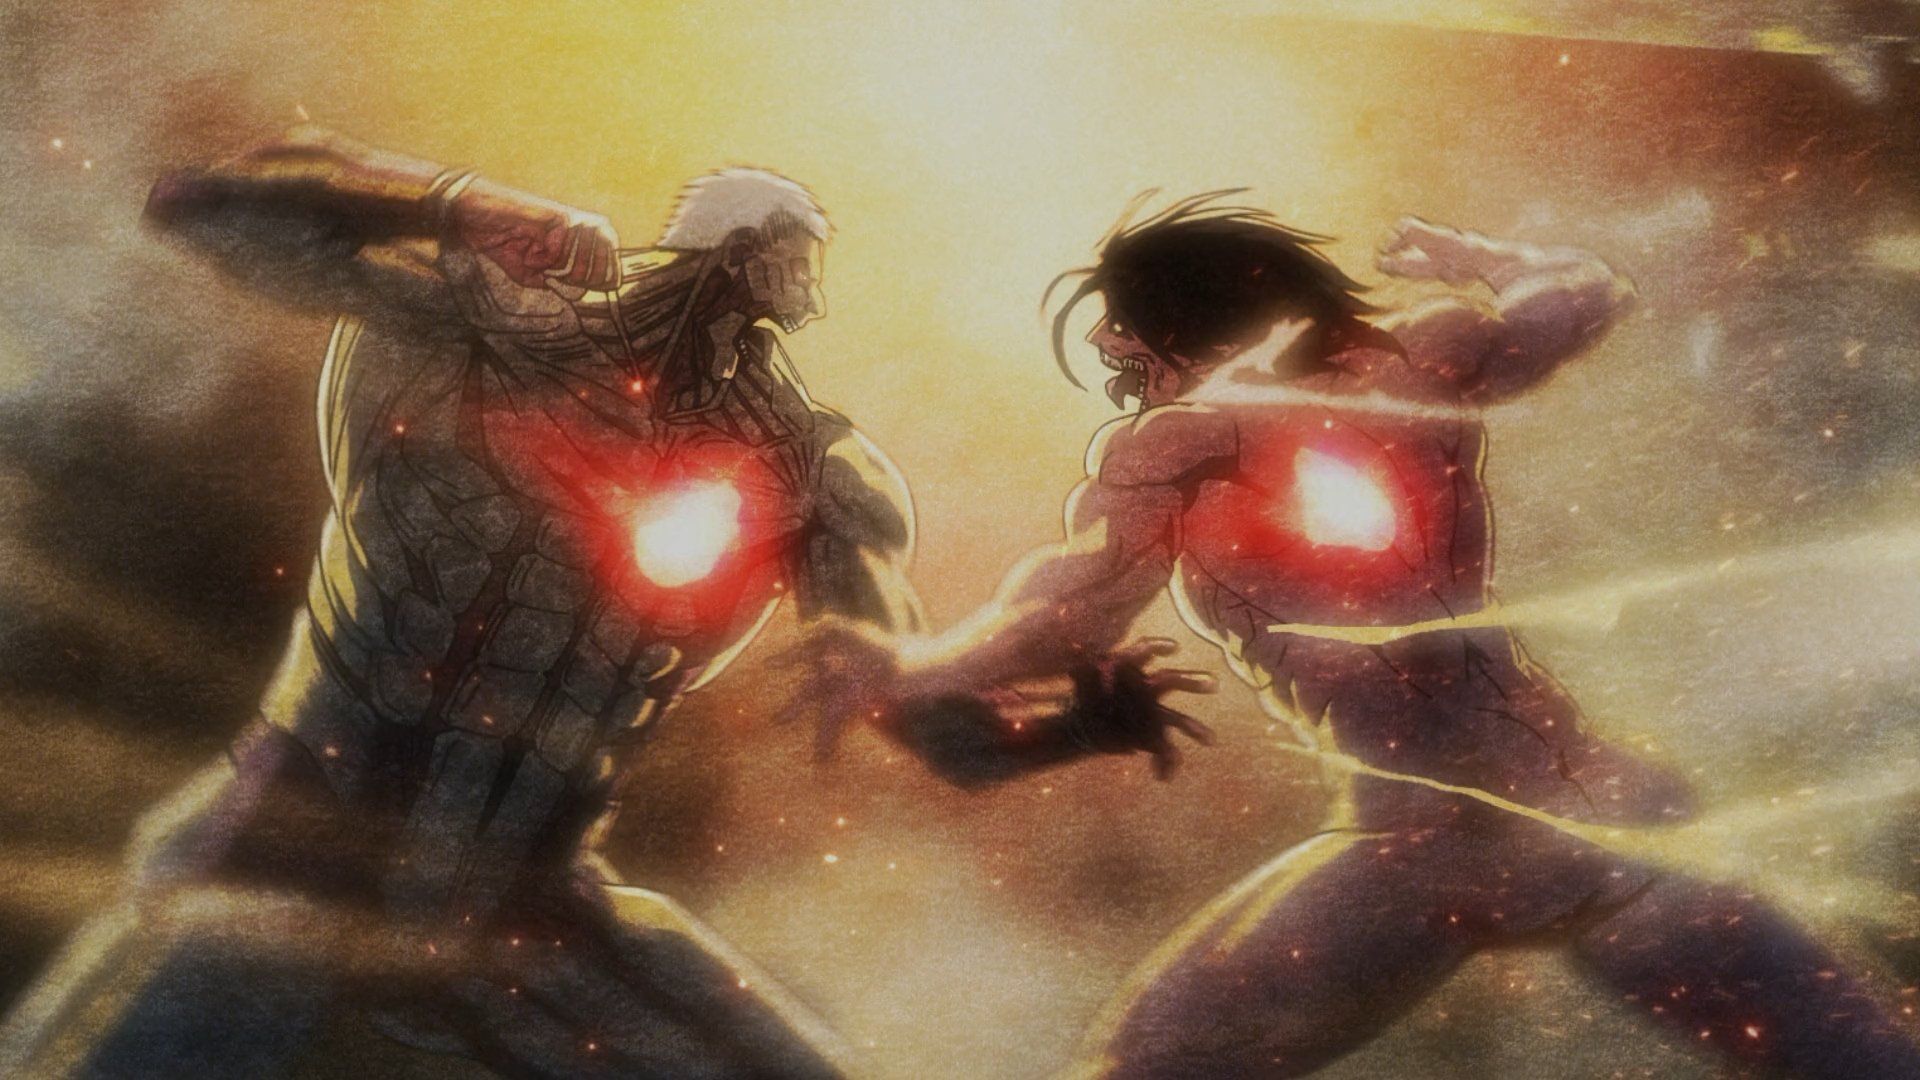 Anime Attack On Titan Shingeki No .in.com